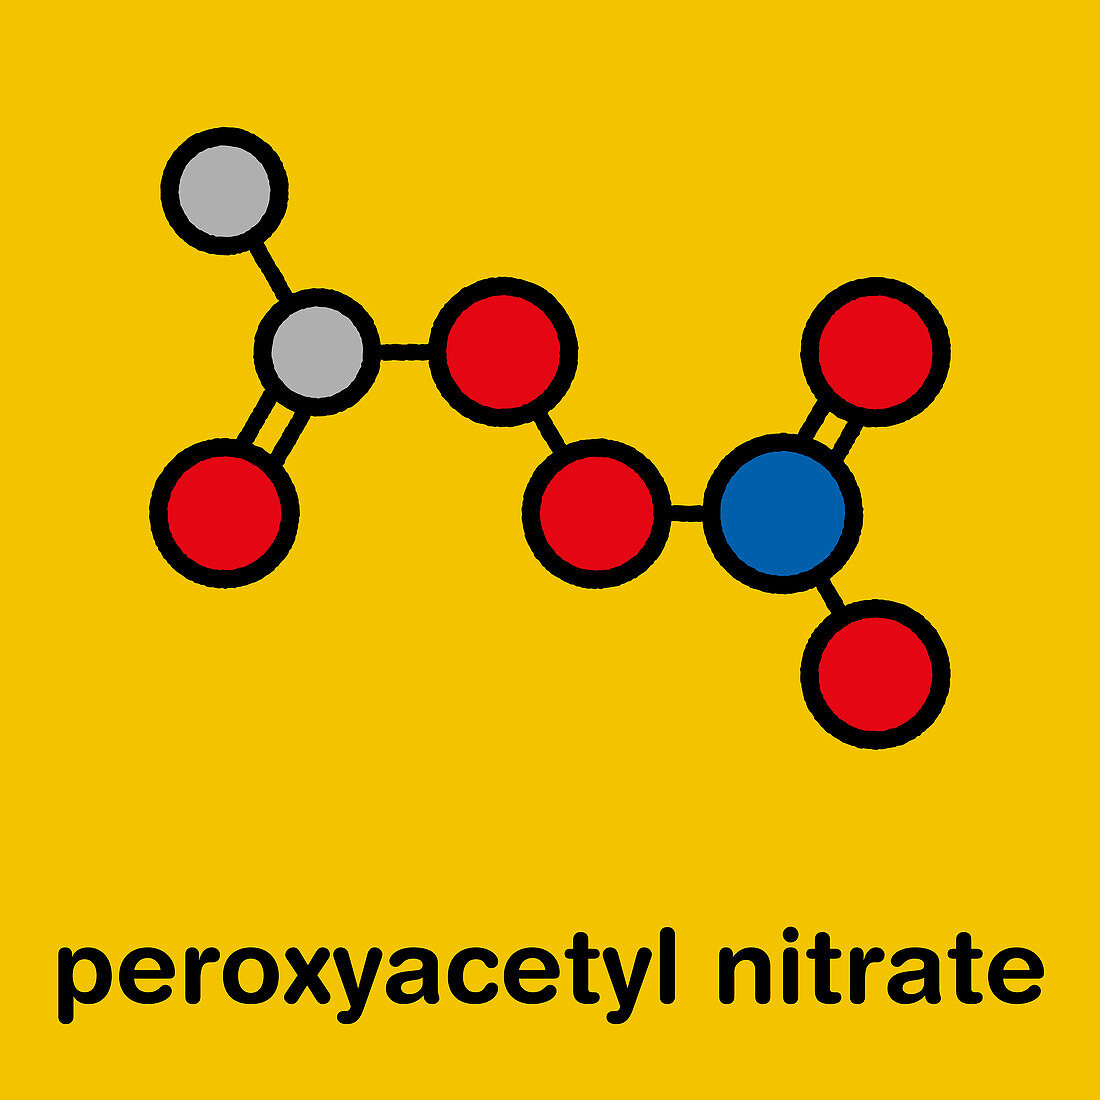 Peroxyacetyl nitrate pollutant molecule, illustration